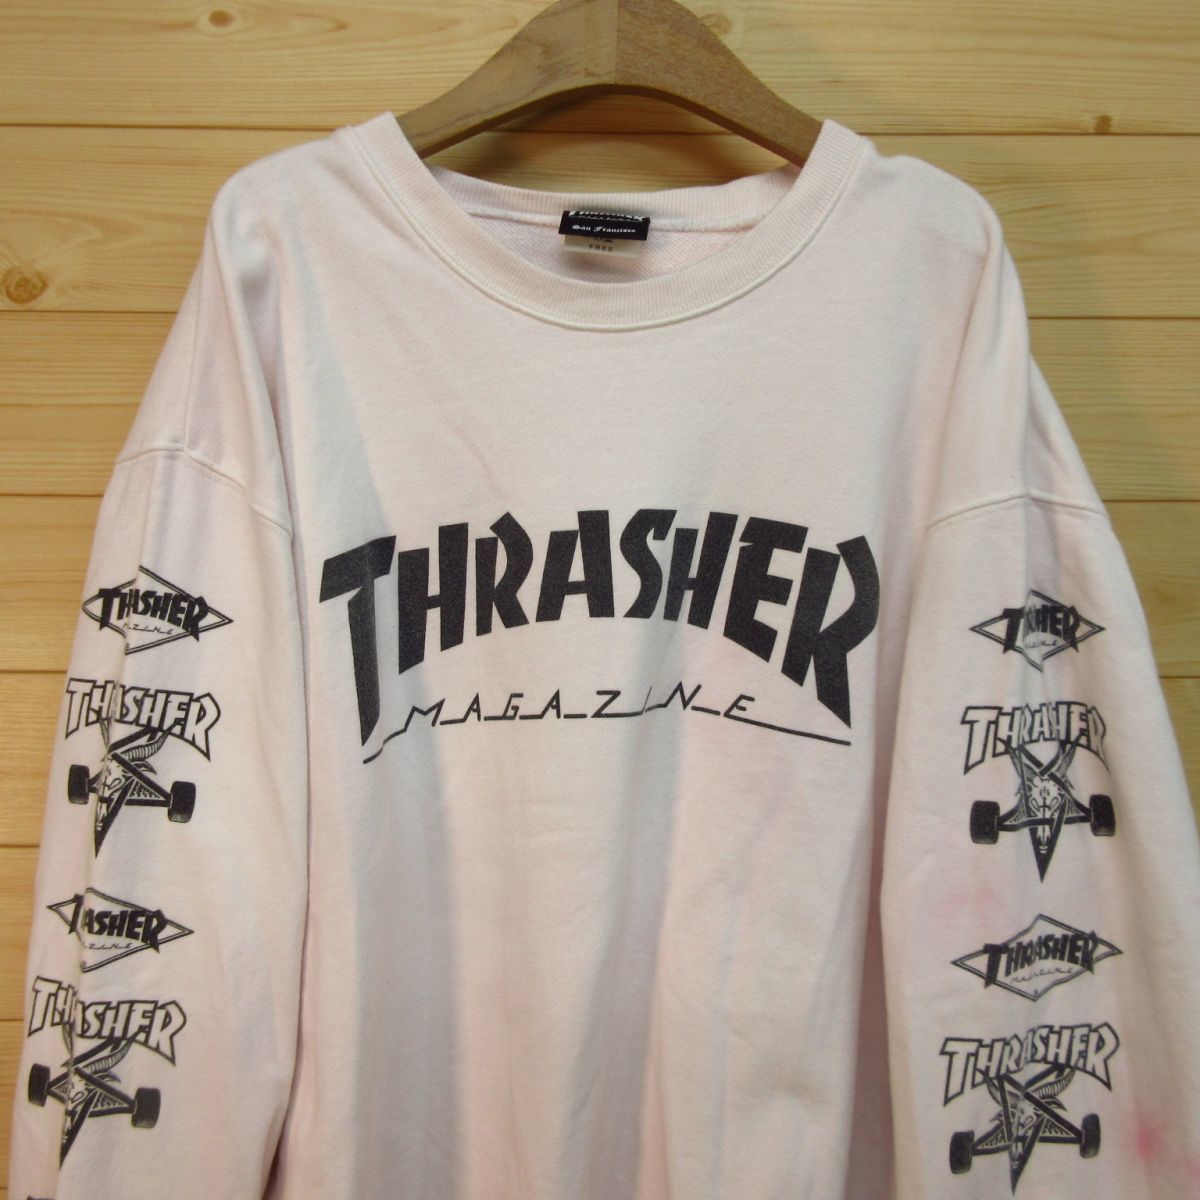 *THRASHER Thrasher * тяжелый to футболка тренировочный после окраска рукав Logo скейтборд ske-ta-* мужской розовый F размер *A3877